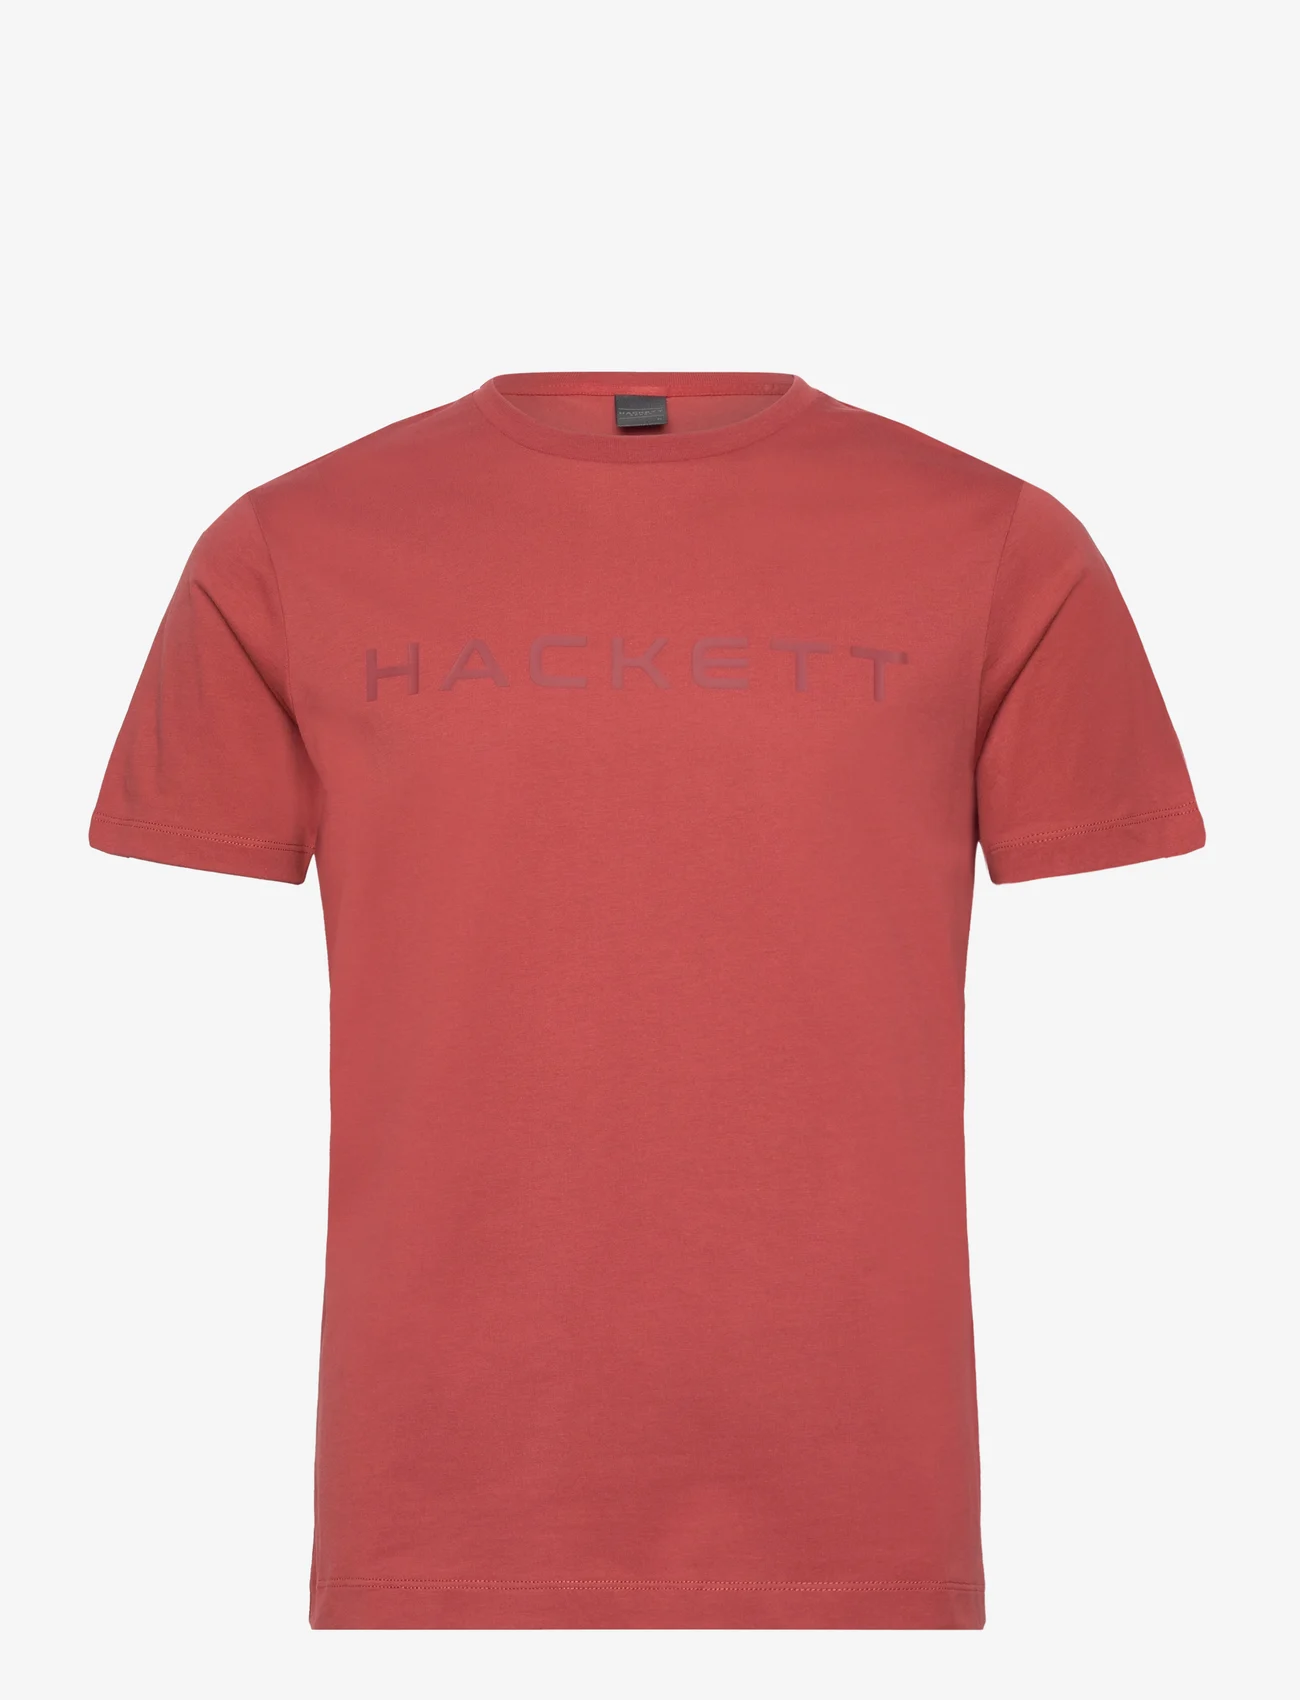 Hackett London - ESSENTIAL TEE - podstawowe koszulki - burnt orange - 0